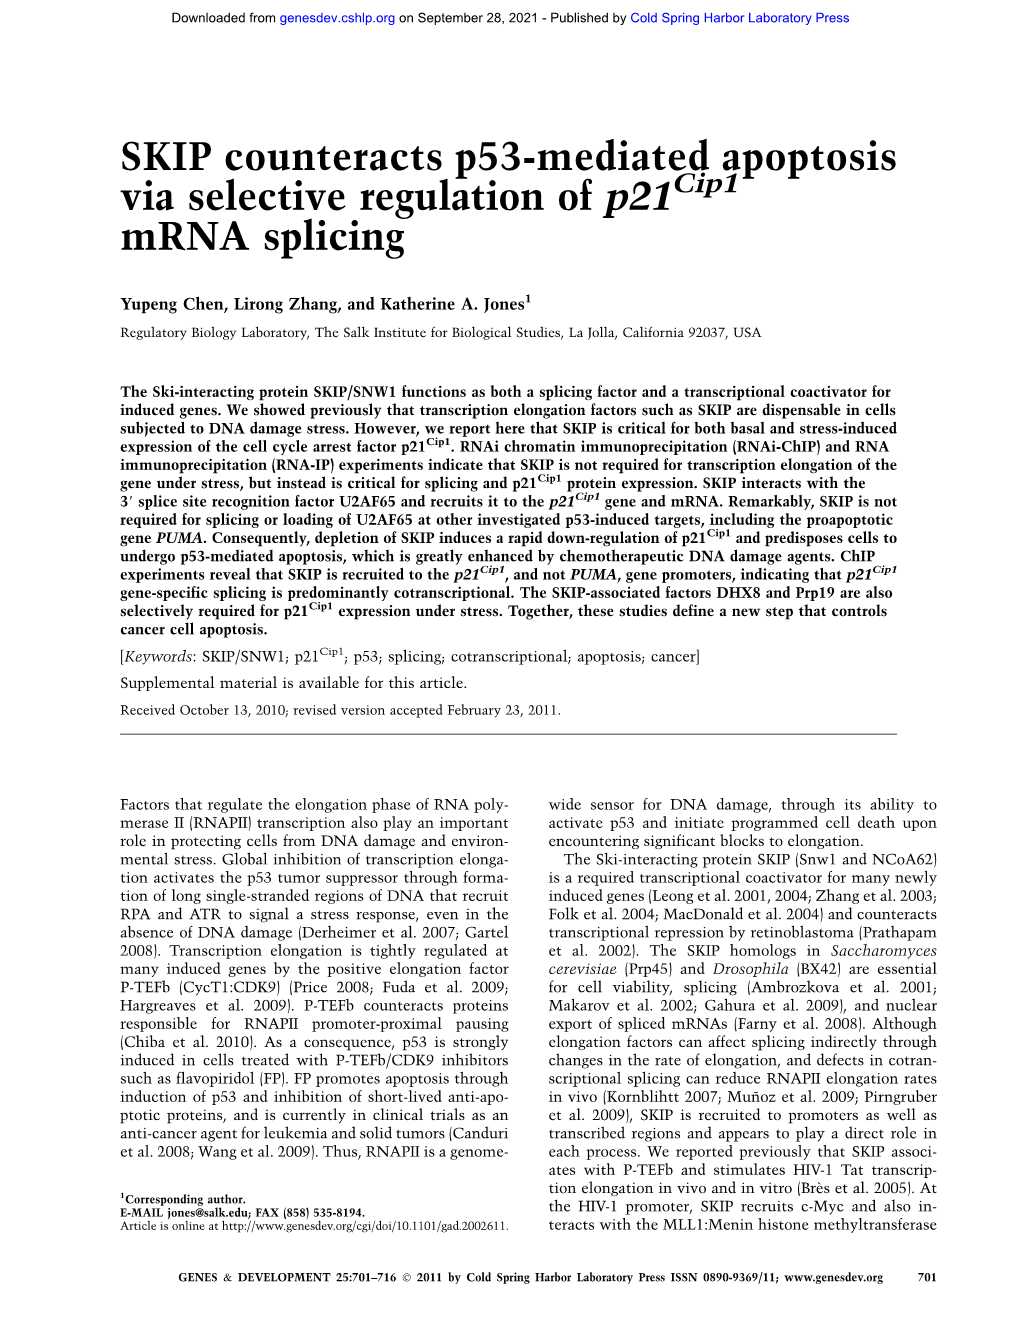 SKIP Counteracts P53-Mediated Apoptosis Via Selective Regulation of P21cip1 Mrna Splicing